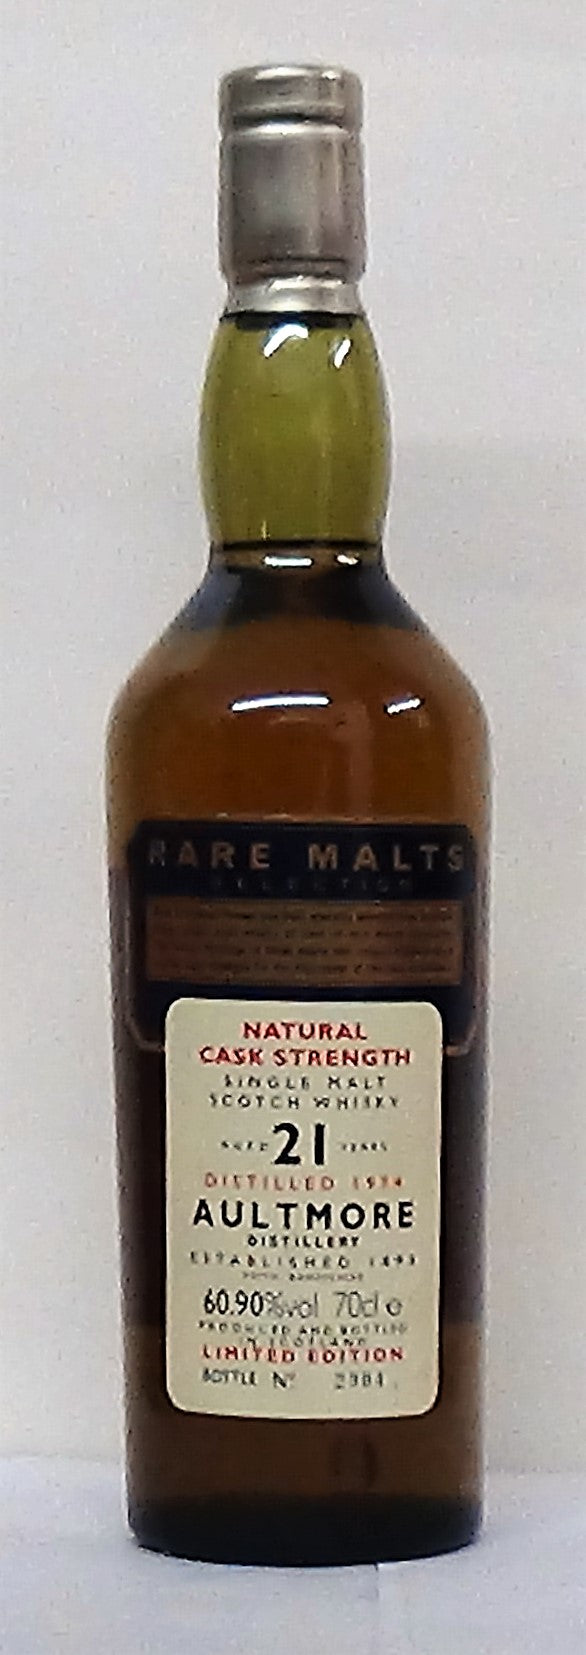 1974 Aultmore 21 Year Old Rare Malts 60.9% Abv Speyside Single Malt Sc